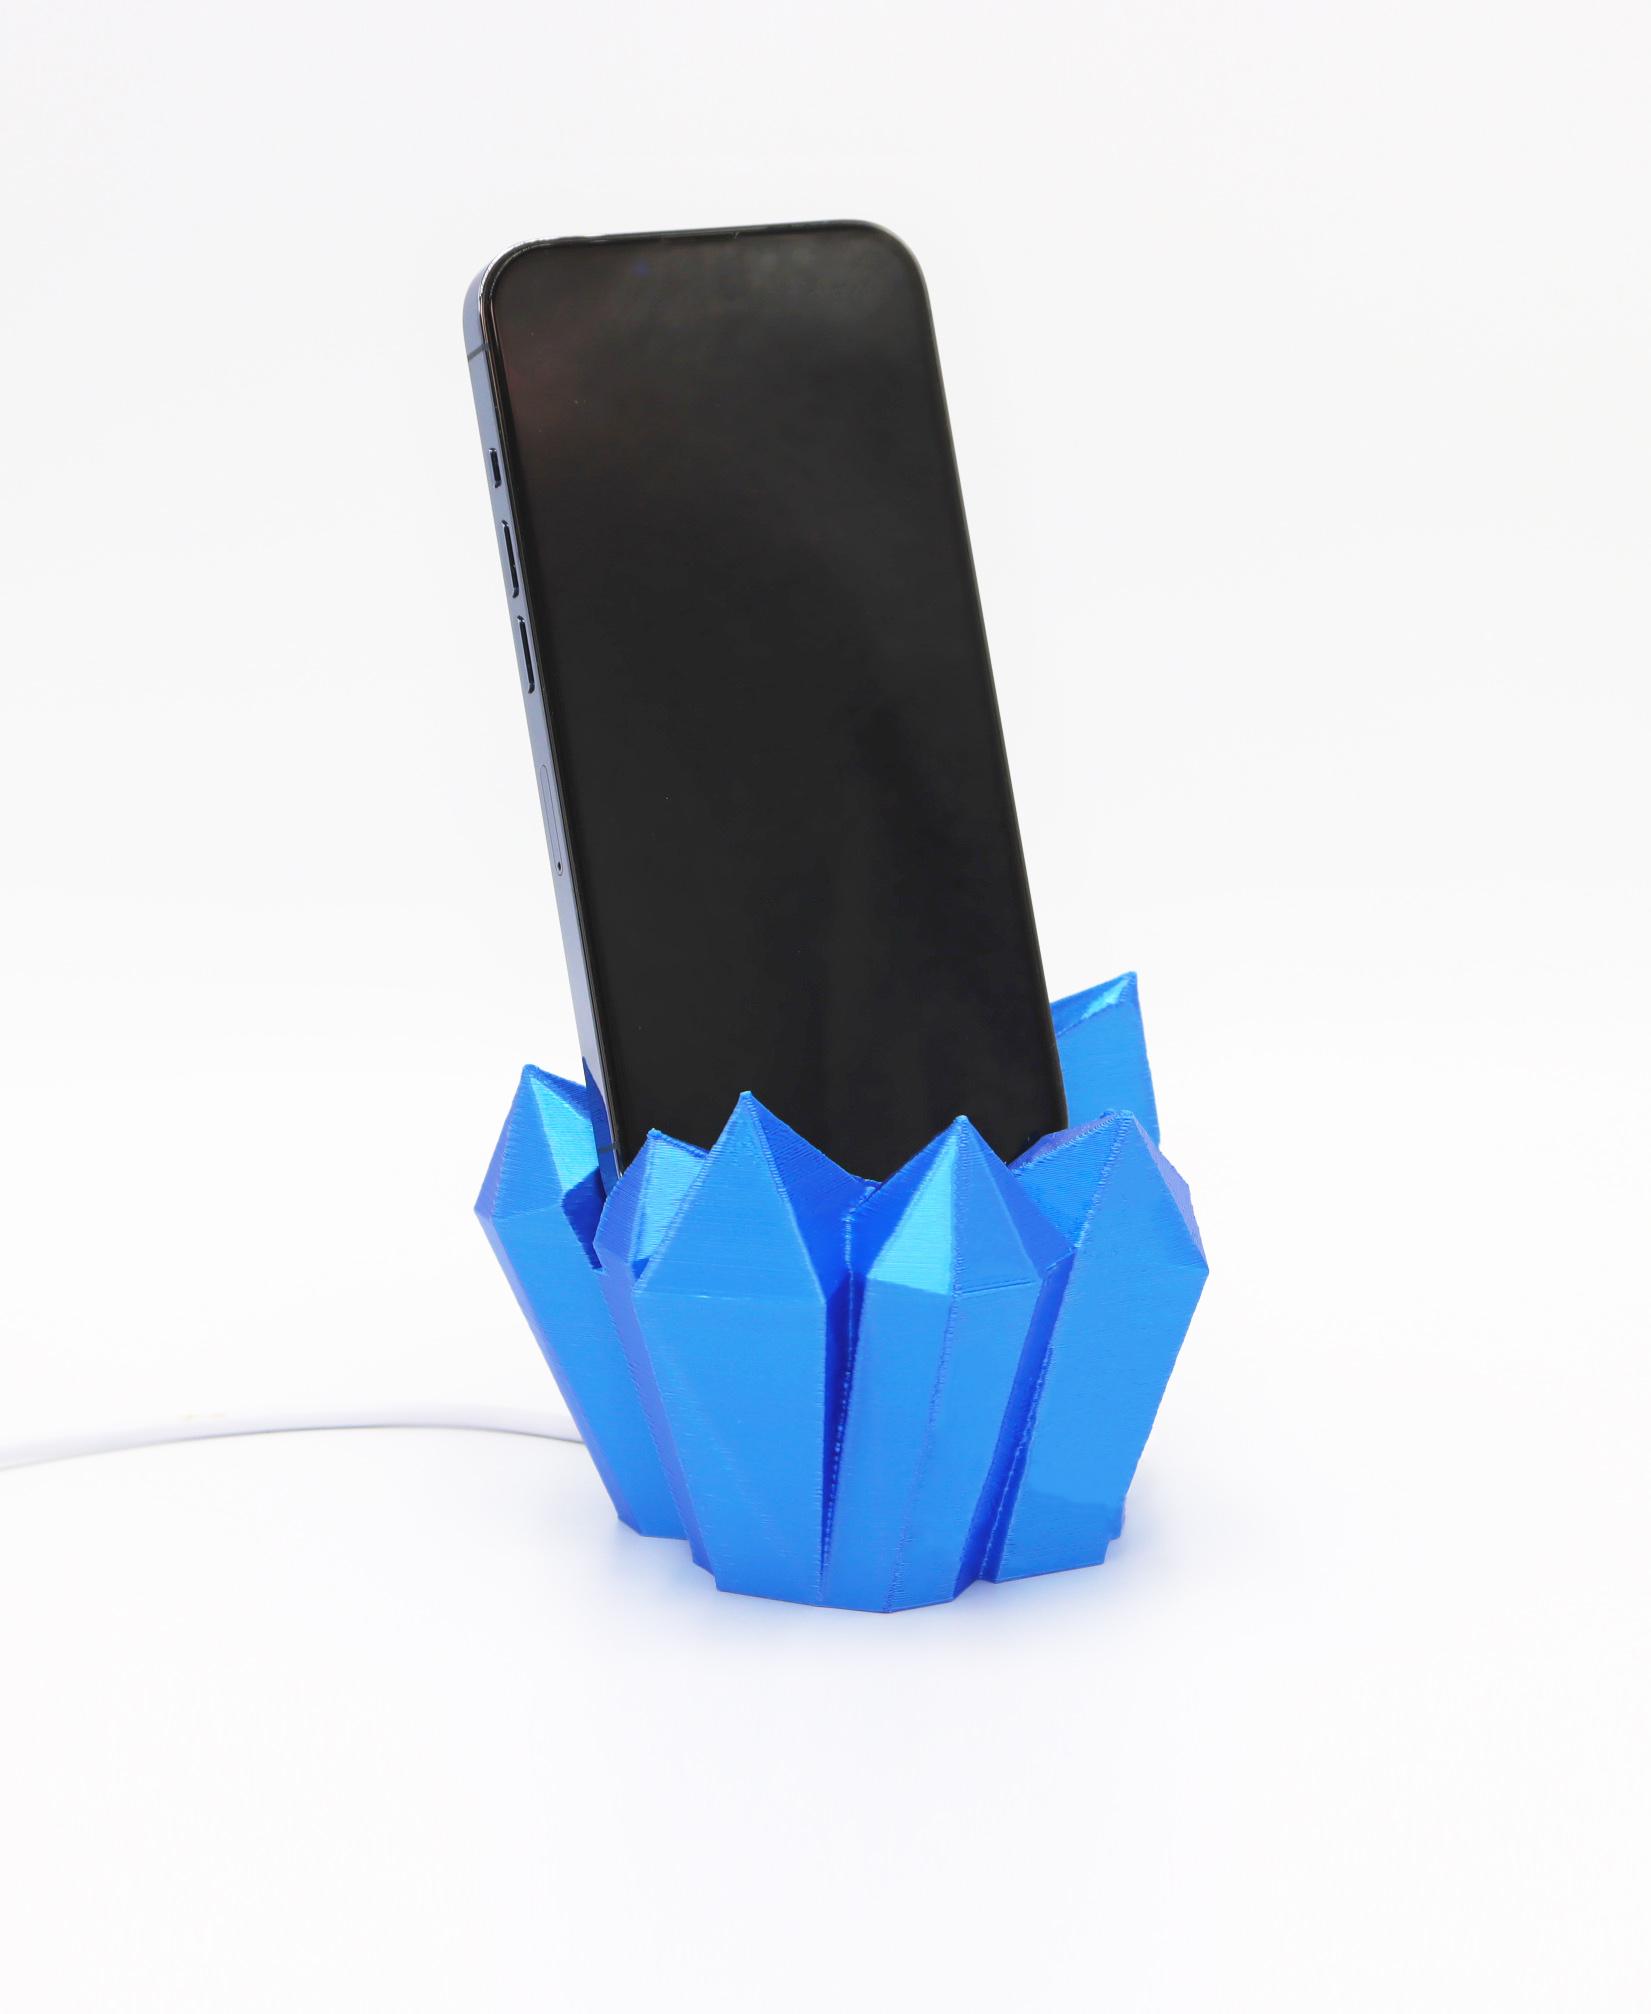 Crystal phone dock 3d model